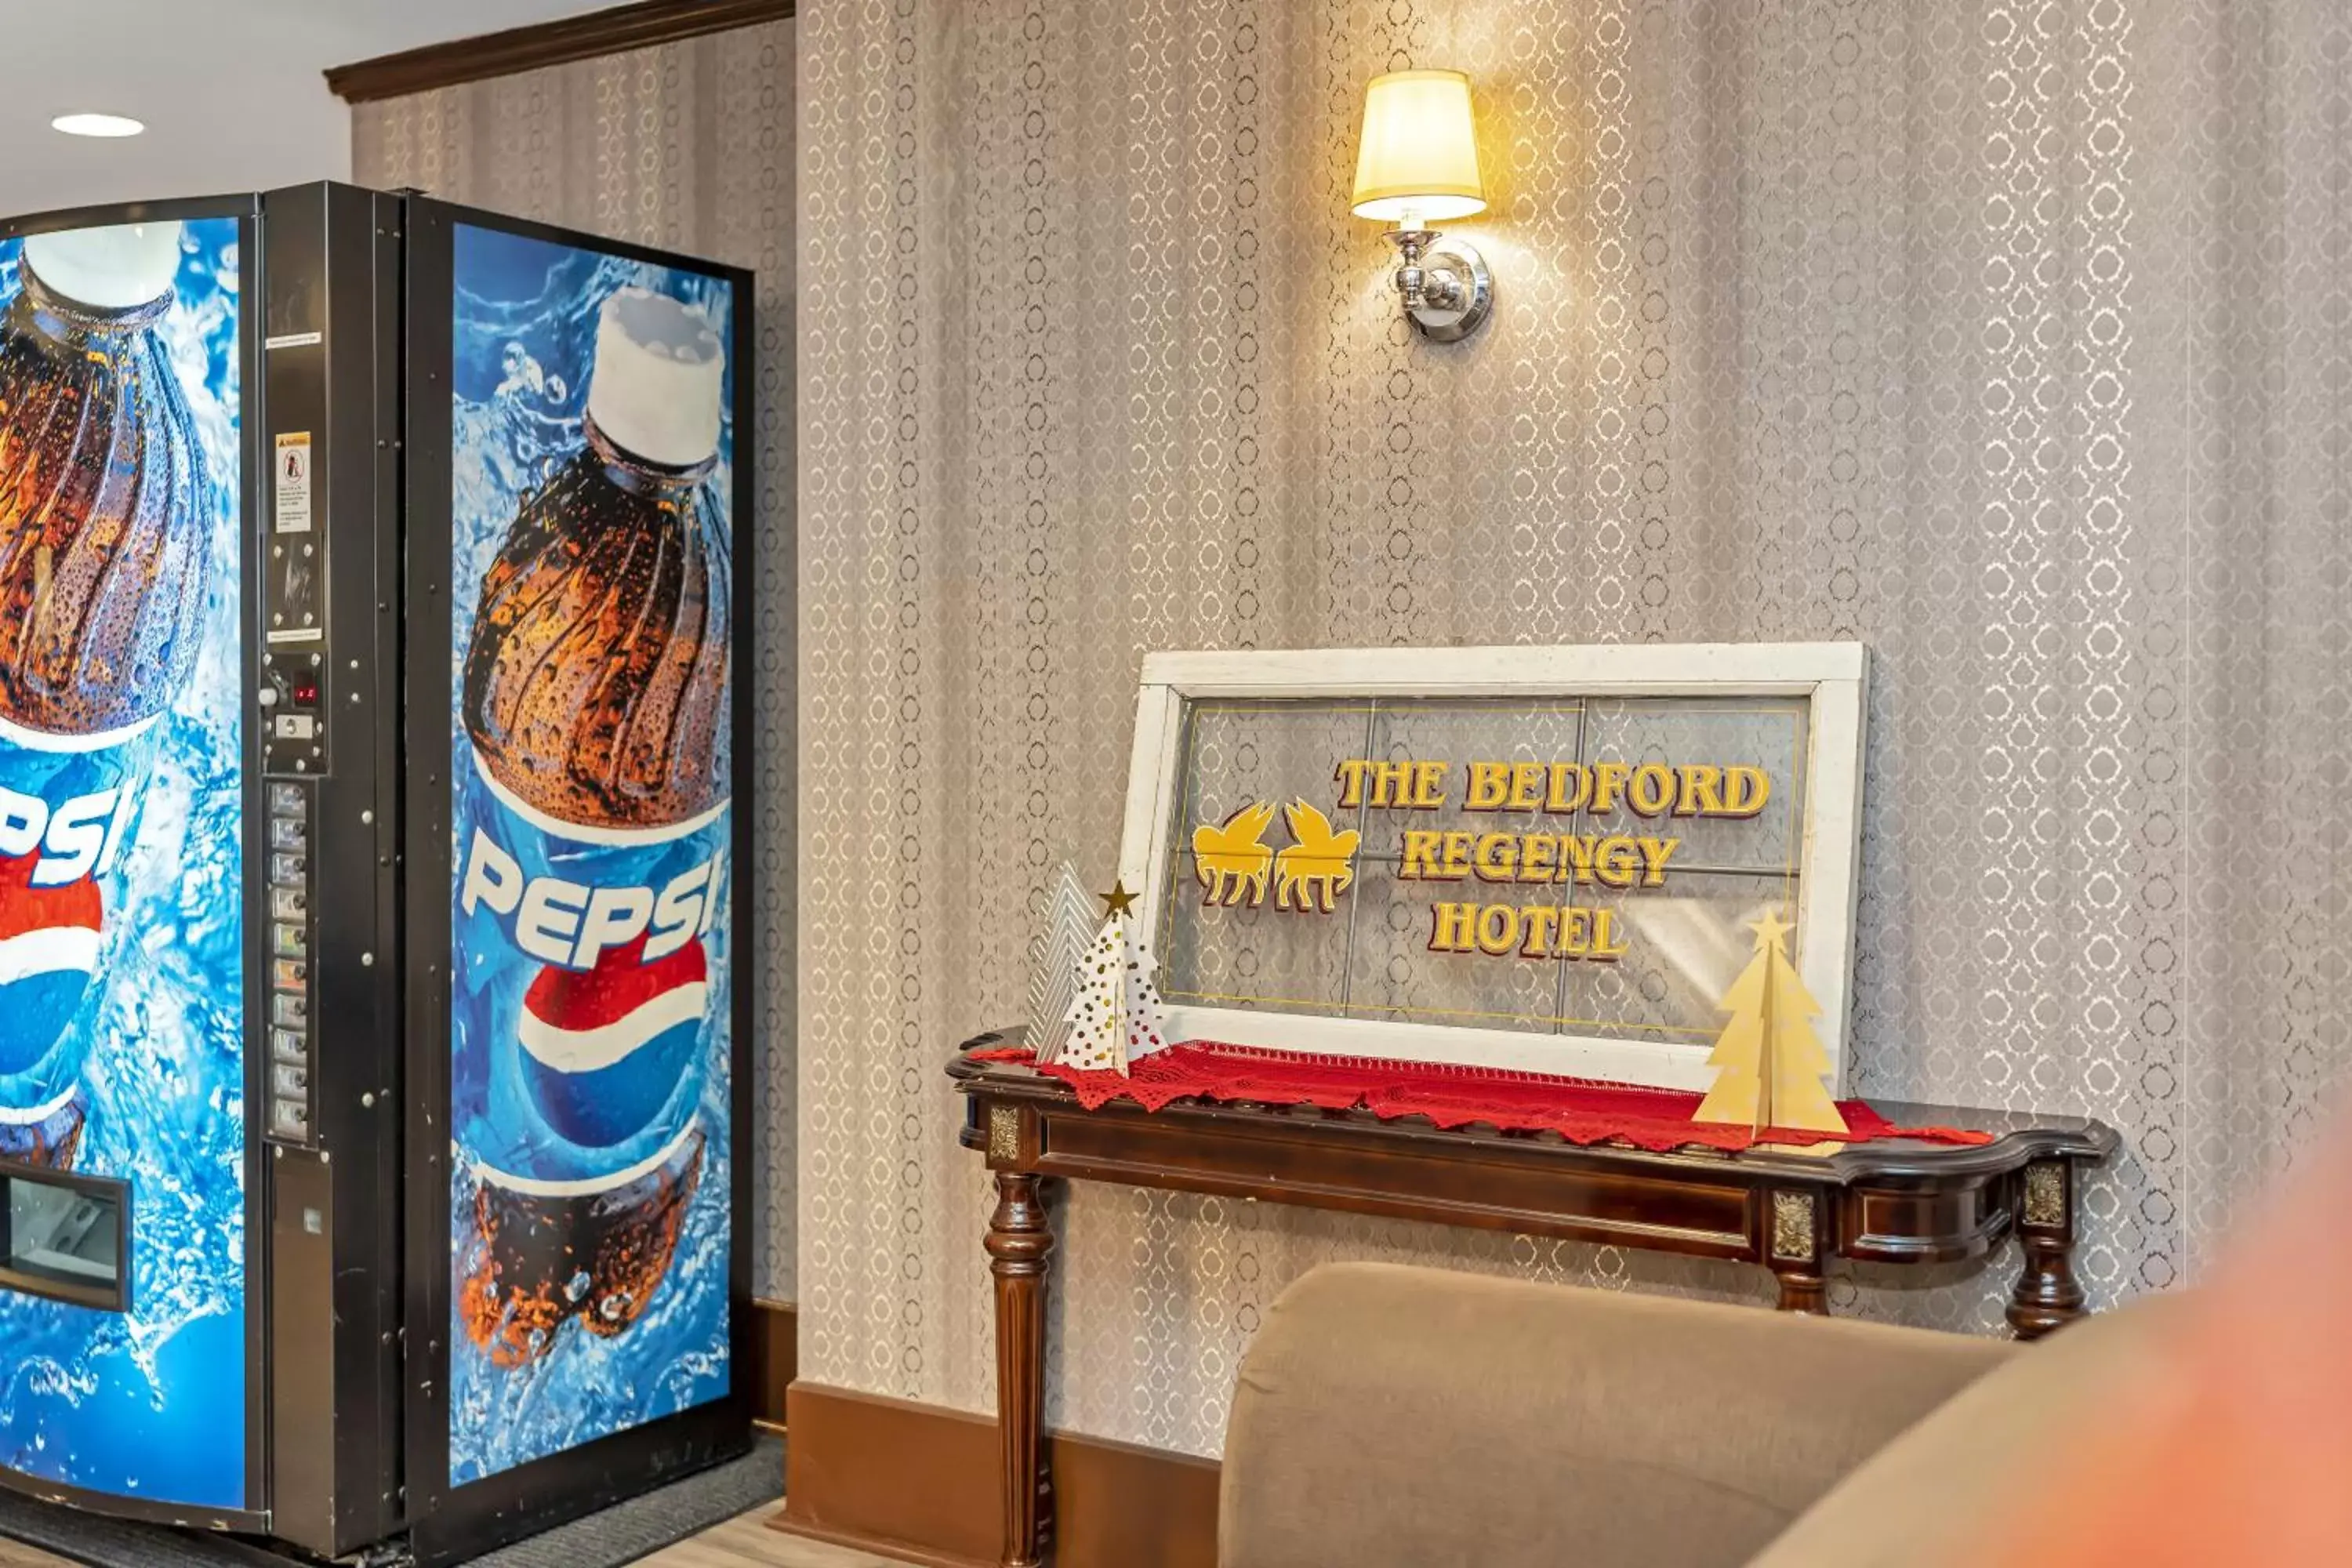 vending machine in The Bedford Regency Hotel